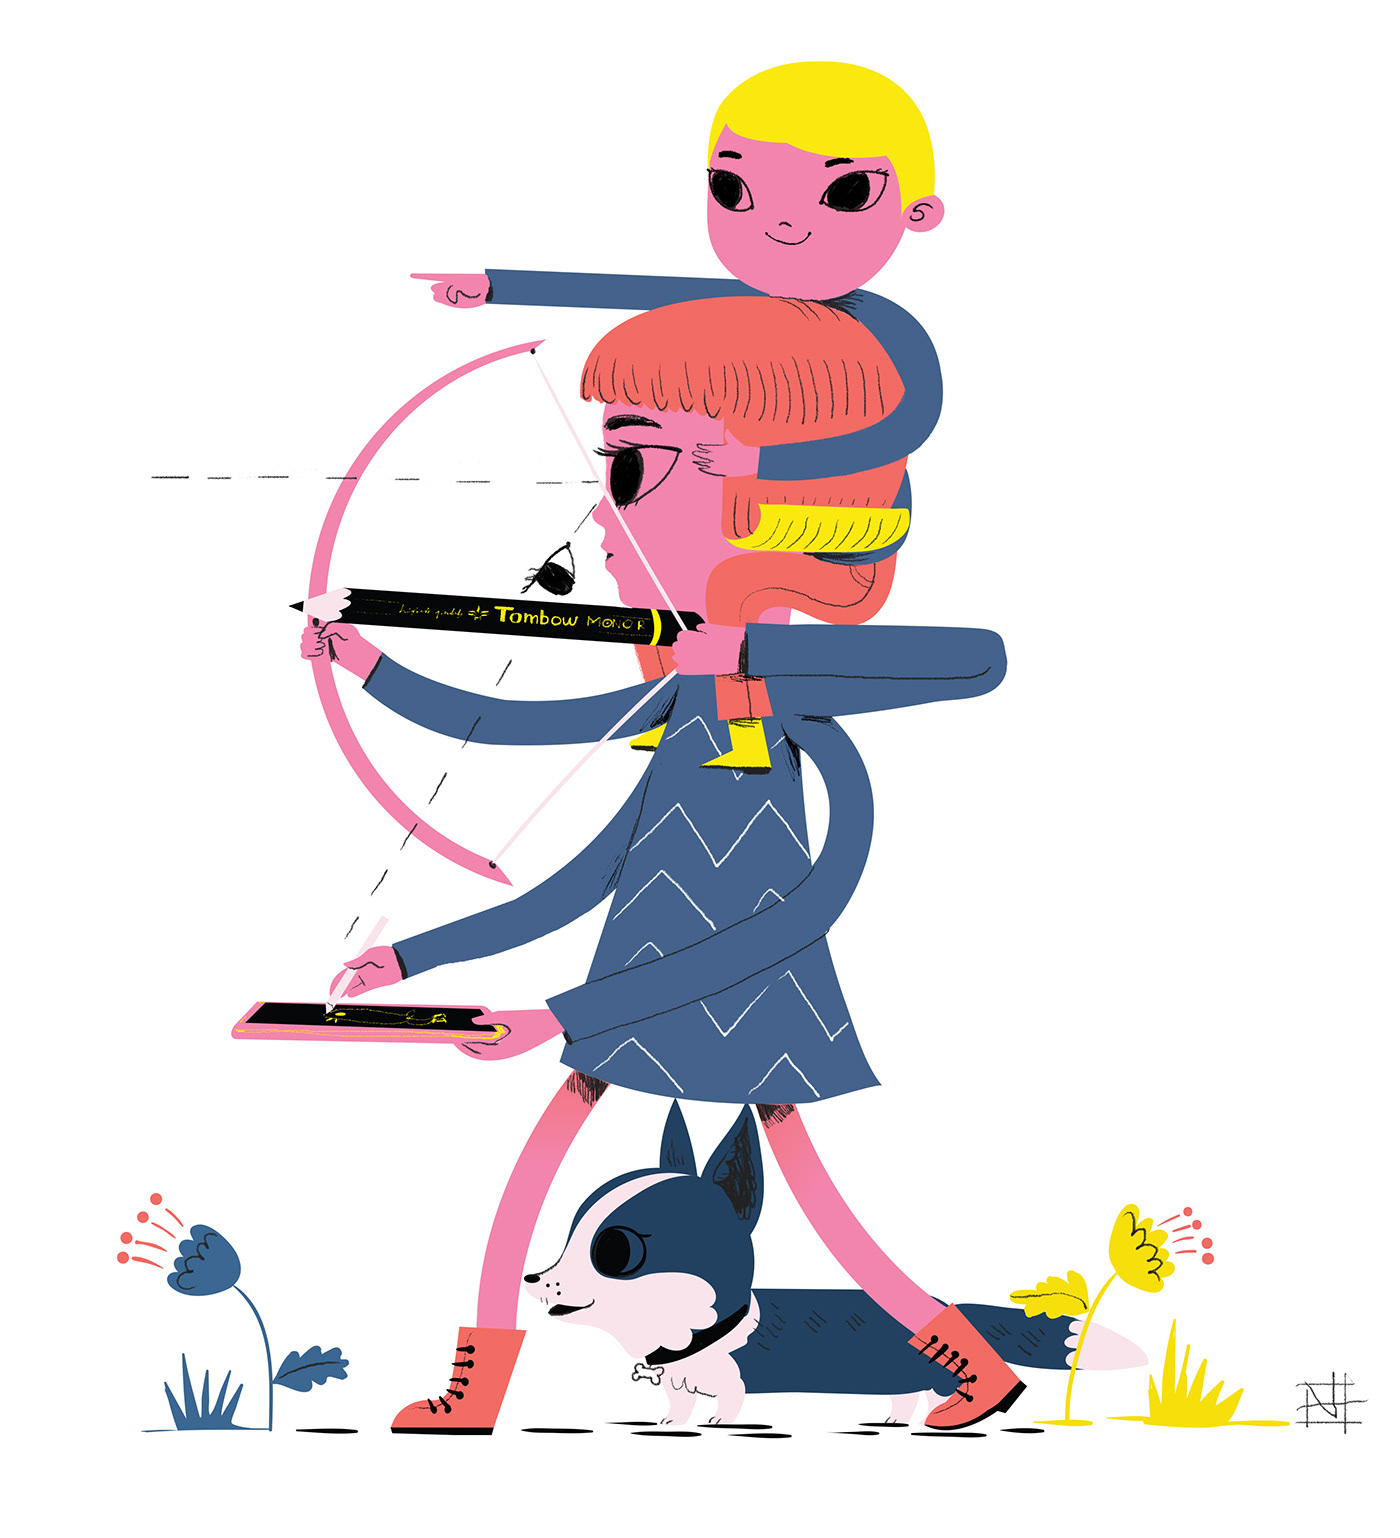 pencil archer Mum mom Working Mother illustration with children new baby Illustrator multitasking